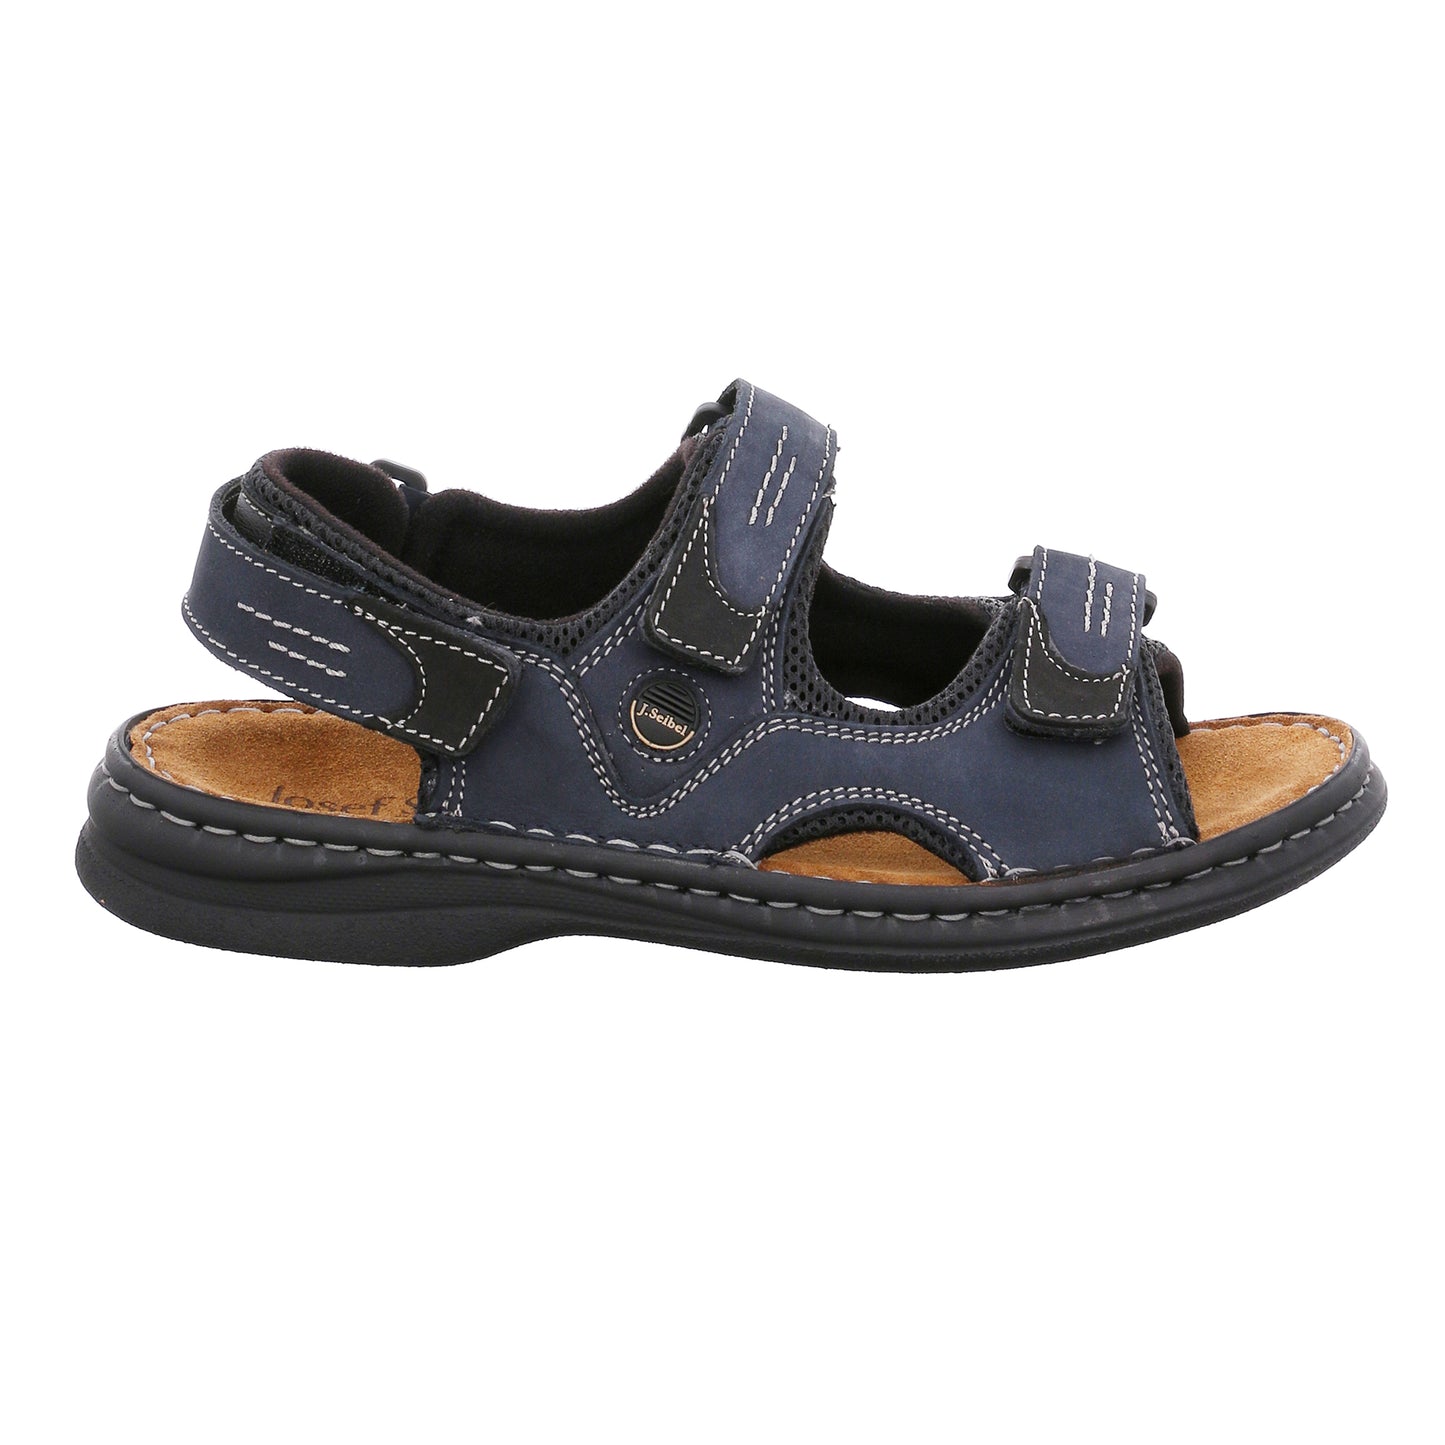 Josef Seibel 10236 11 582 Franklyn Ocean Blue/Black Velcro Sandals